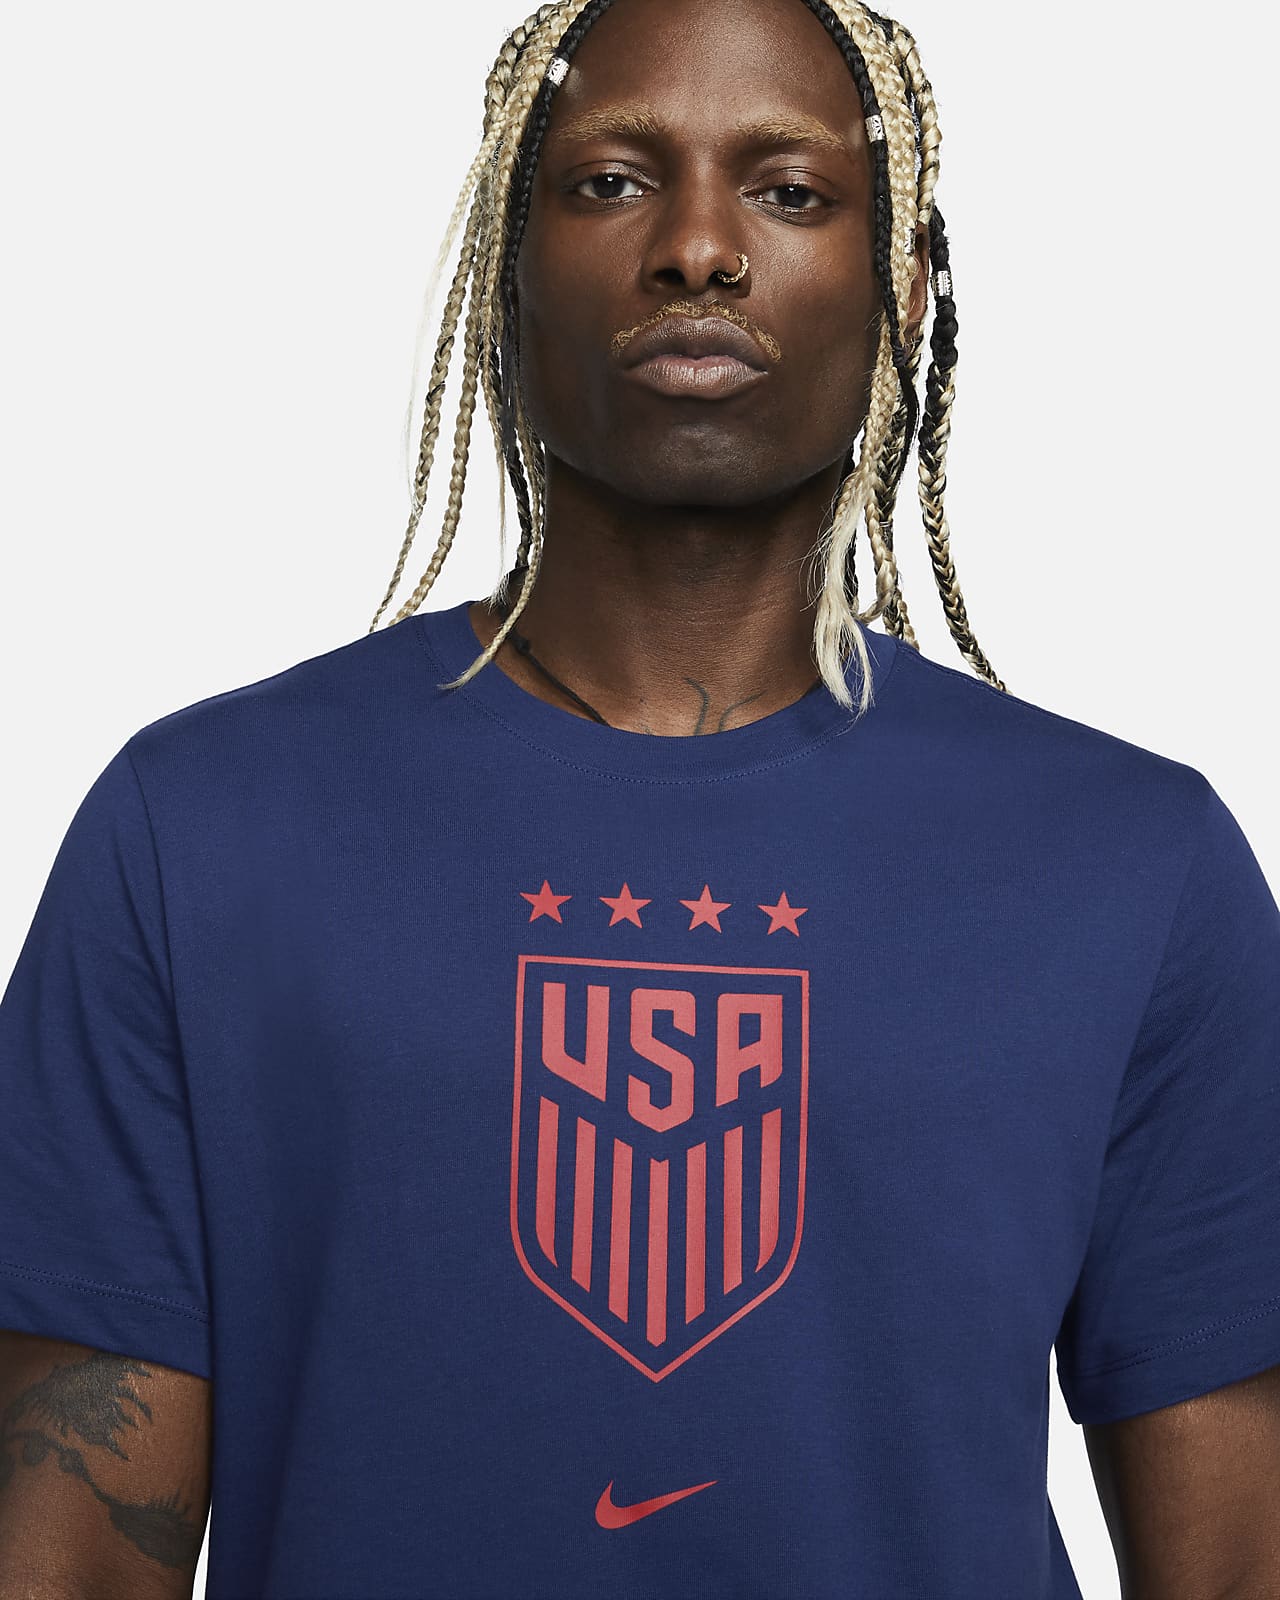 Abundantly rytme gyde U.S. (4-Star) Men's Soccer T-Shirt. Nike.com